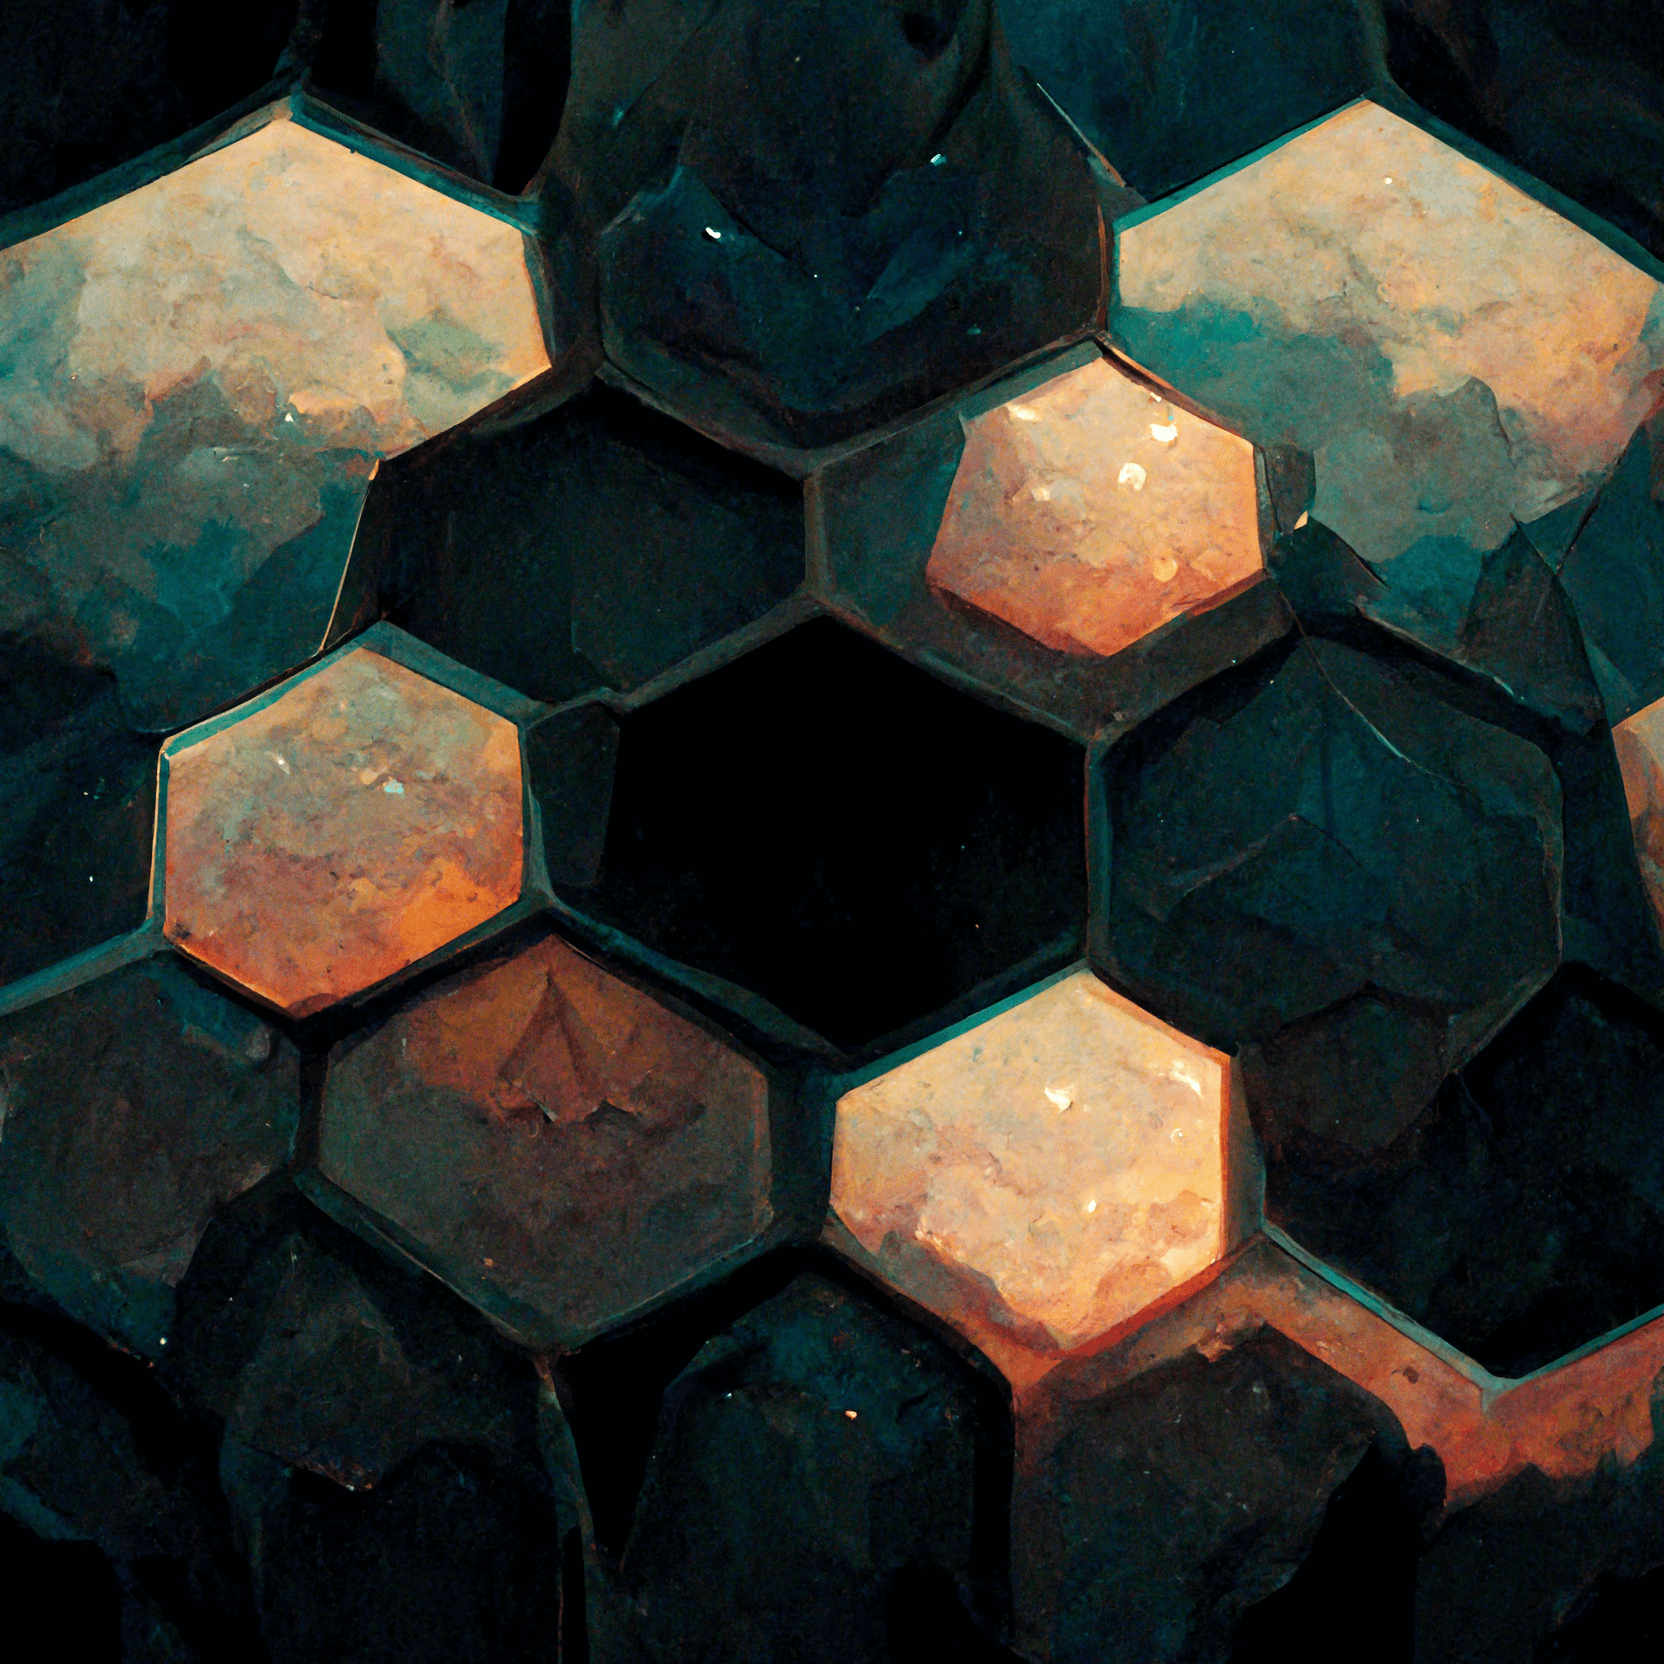 Generated with Midjourney: Dark hexagons